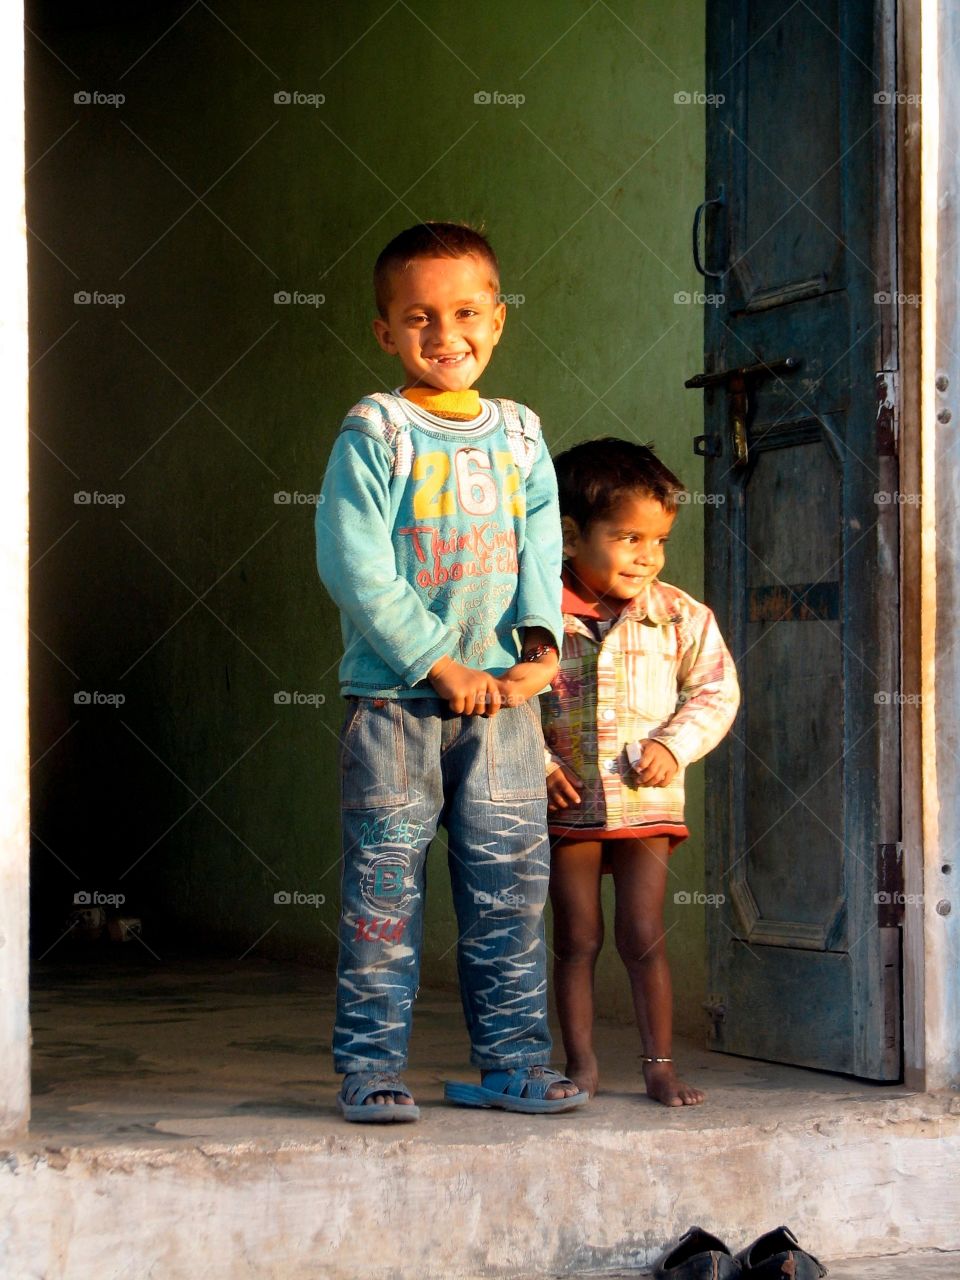 Children in India. Children in the doorway of their home, India